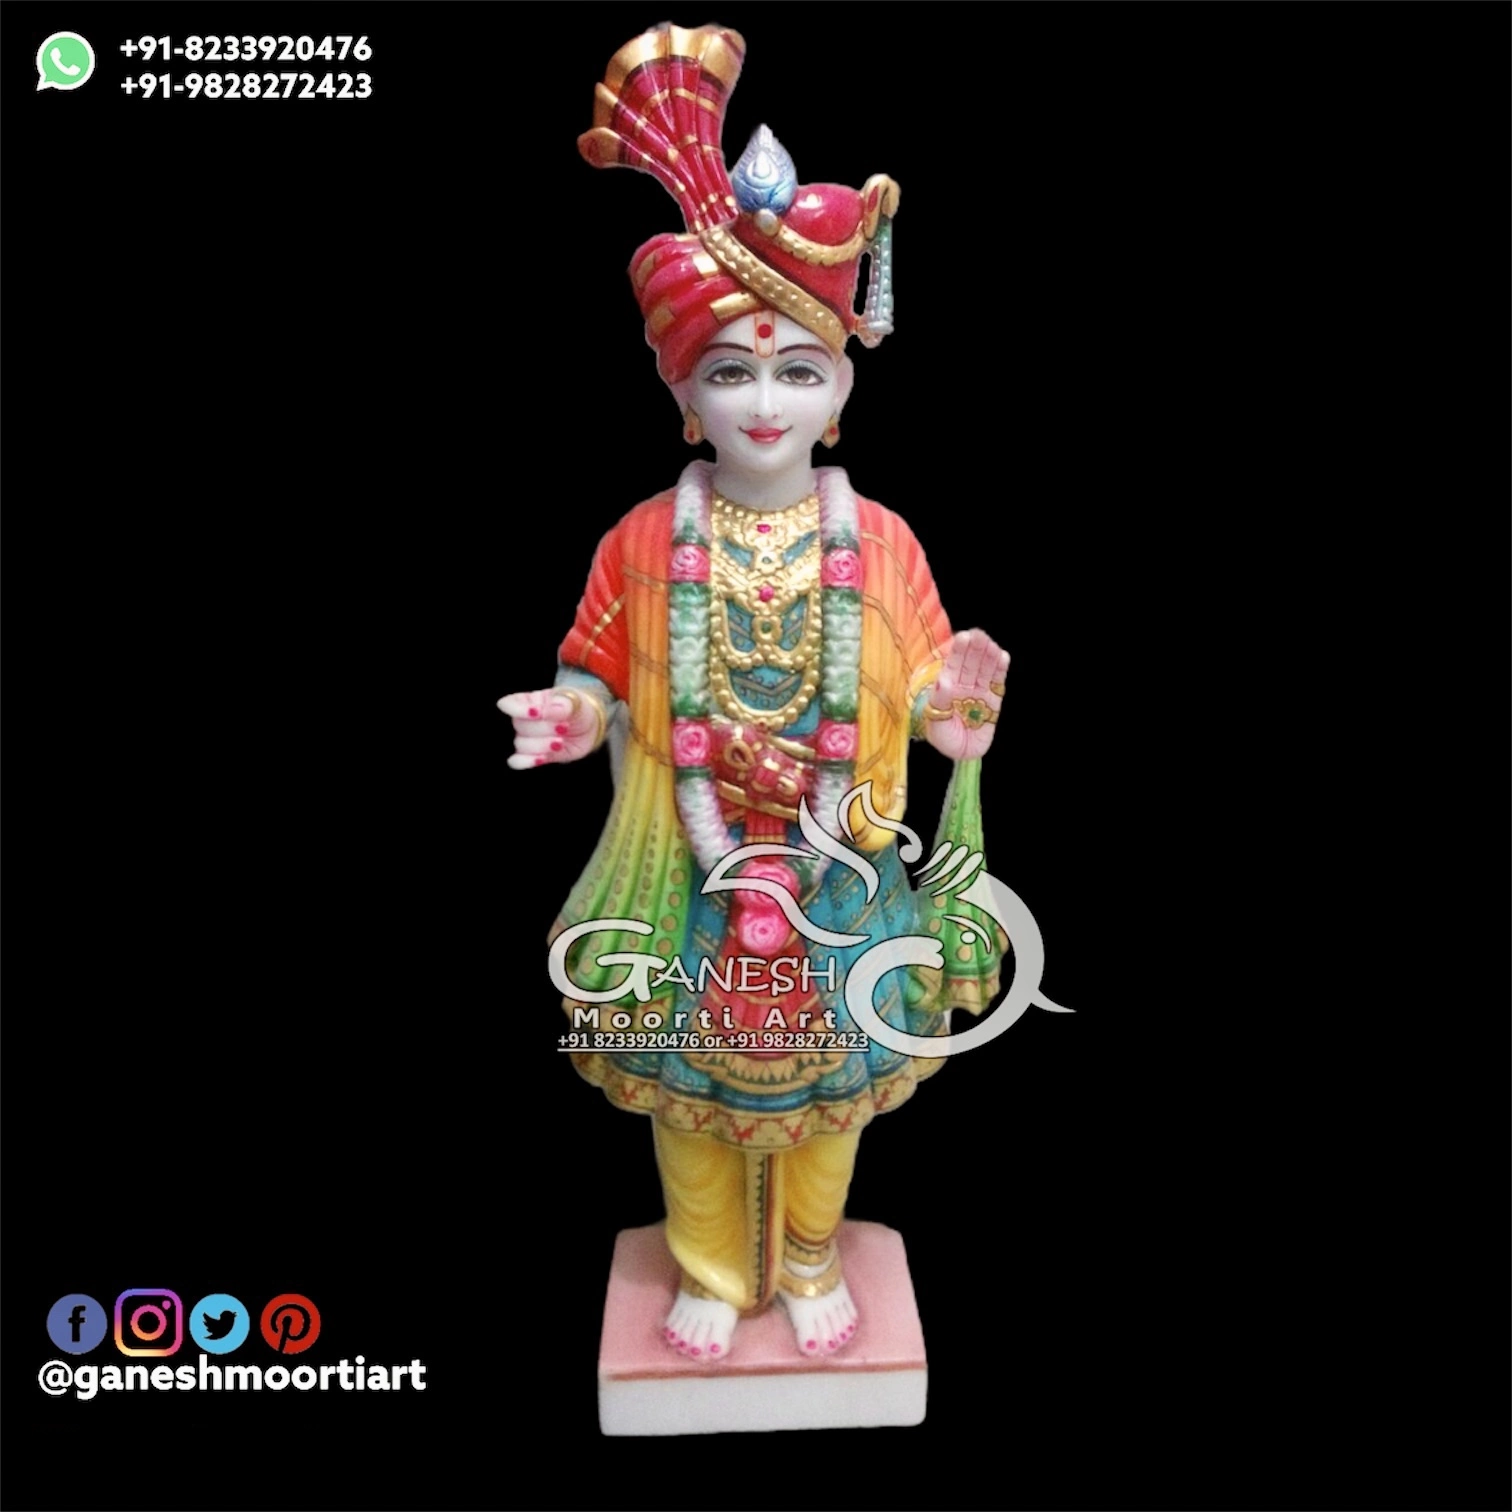 Buy Swami Narayan Idol online